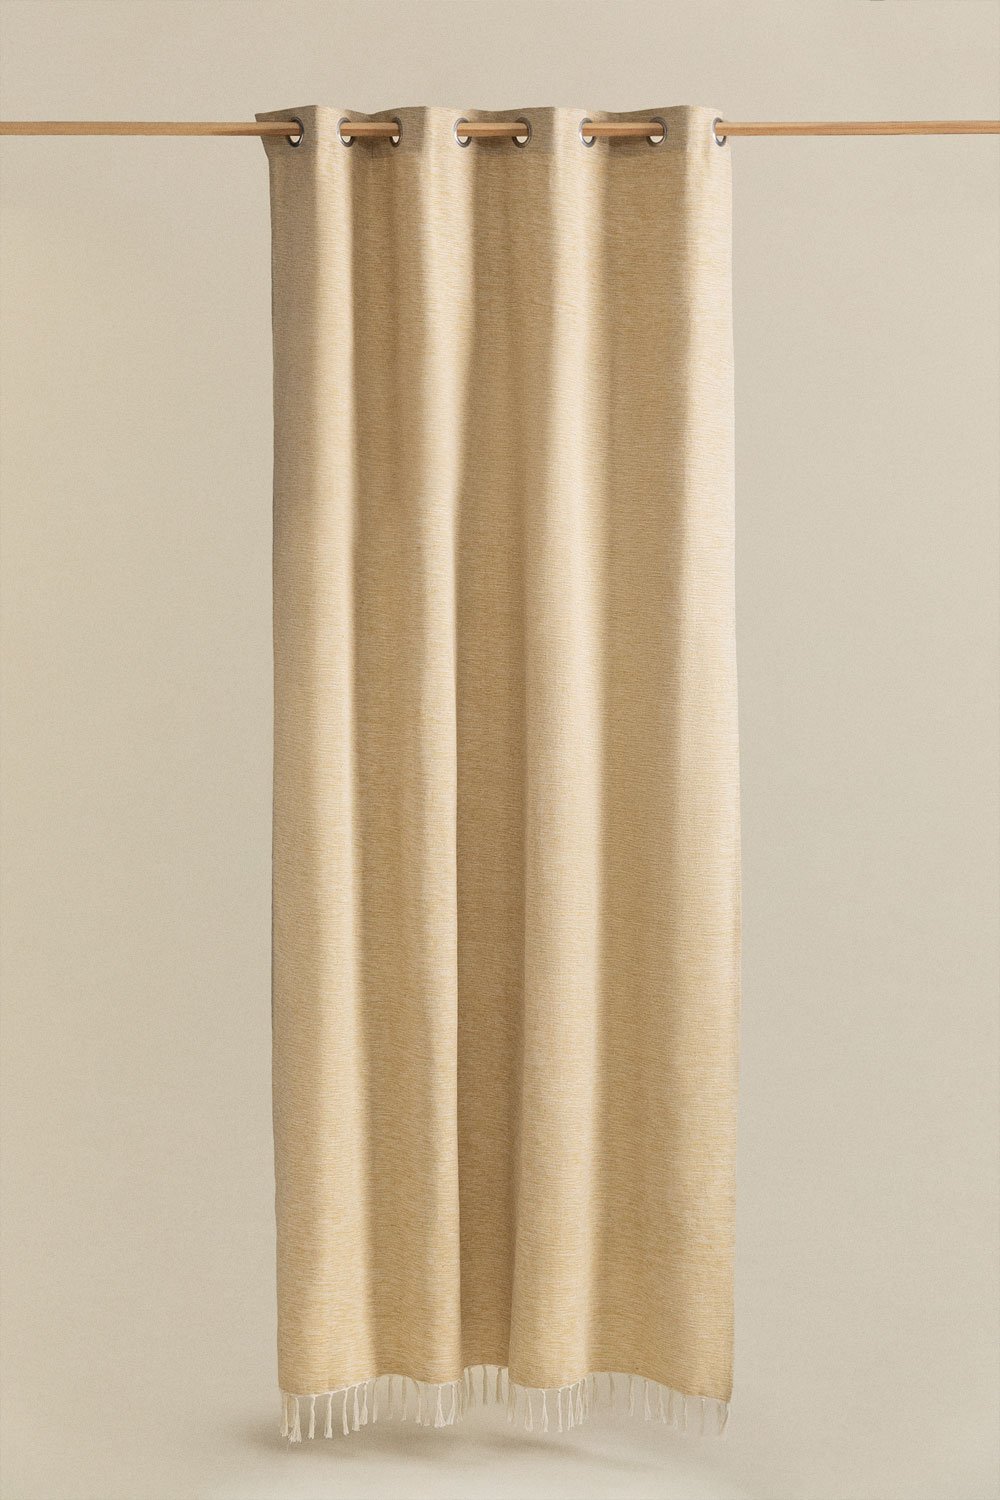 Rideau en coton (140x260 cm) Manami, image de la galerie 1